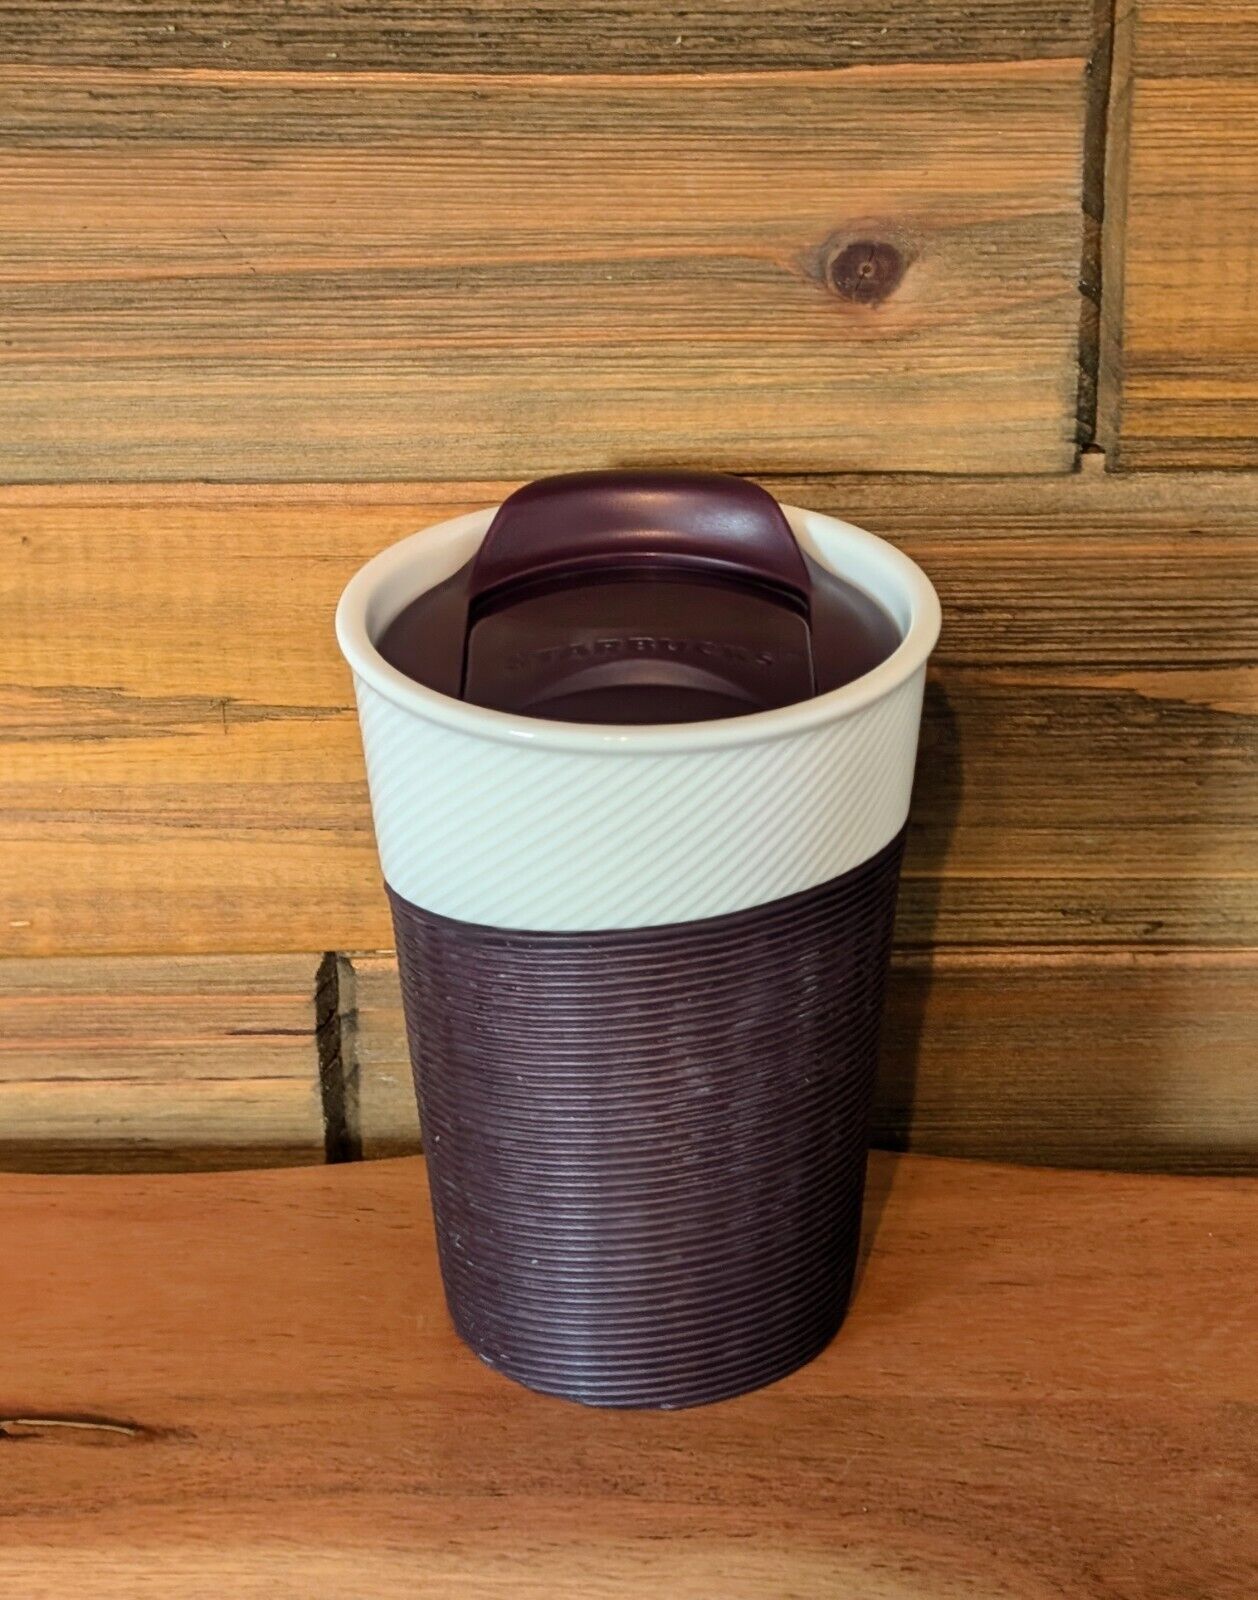 2014 Starbucks Ceramic Coffee Tea Mug w/ Silicone Guard and Slide Lid - Burgundy